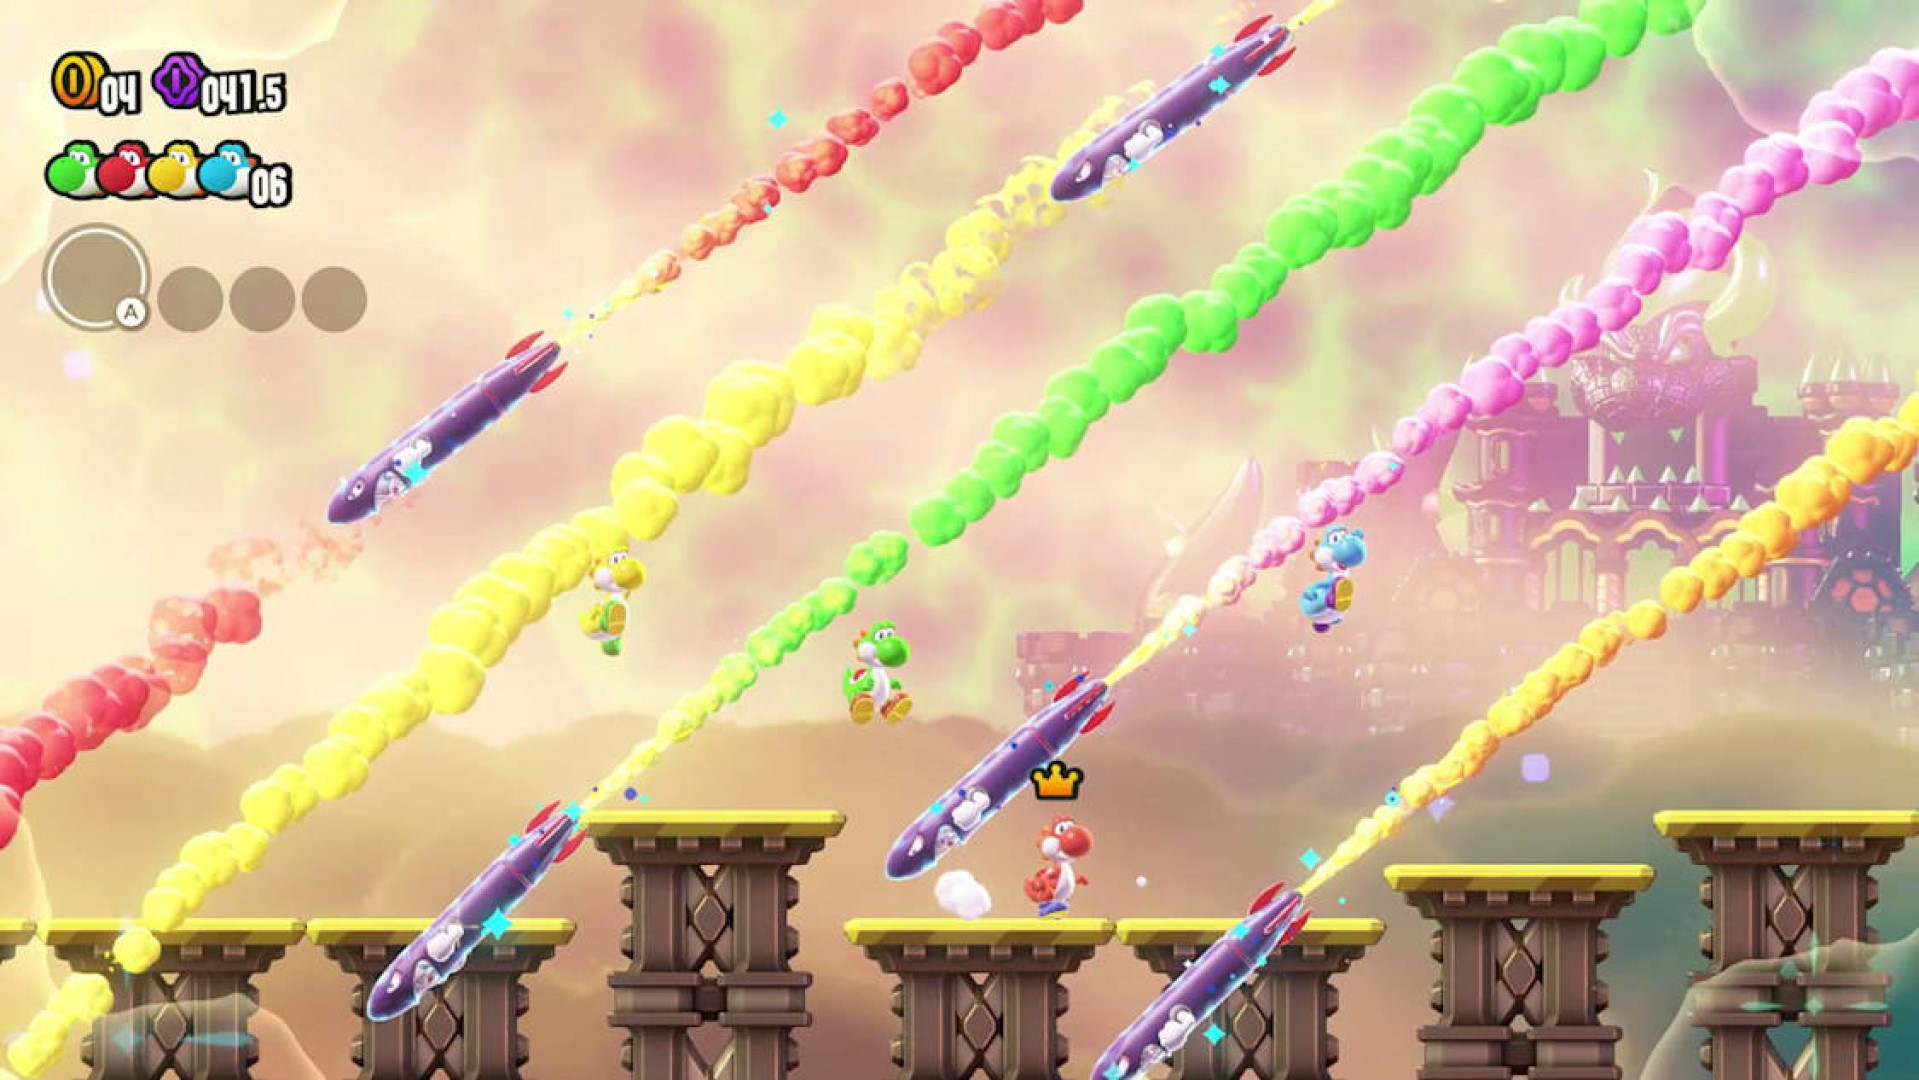 Random: Bowser Tries To Woo Elephant Peach In Super Mario Bros. Wonder Ad